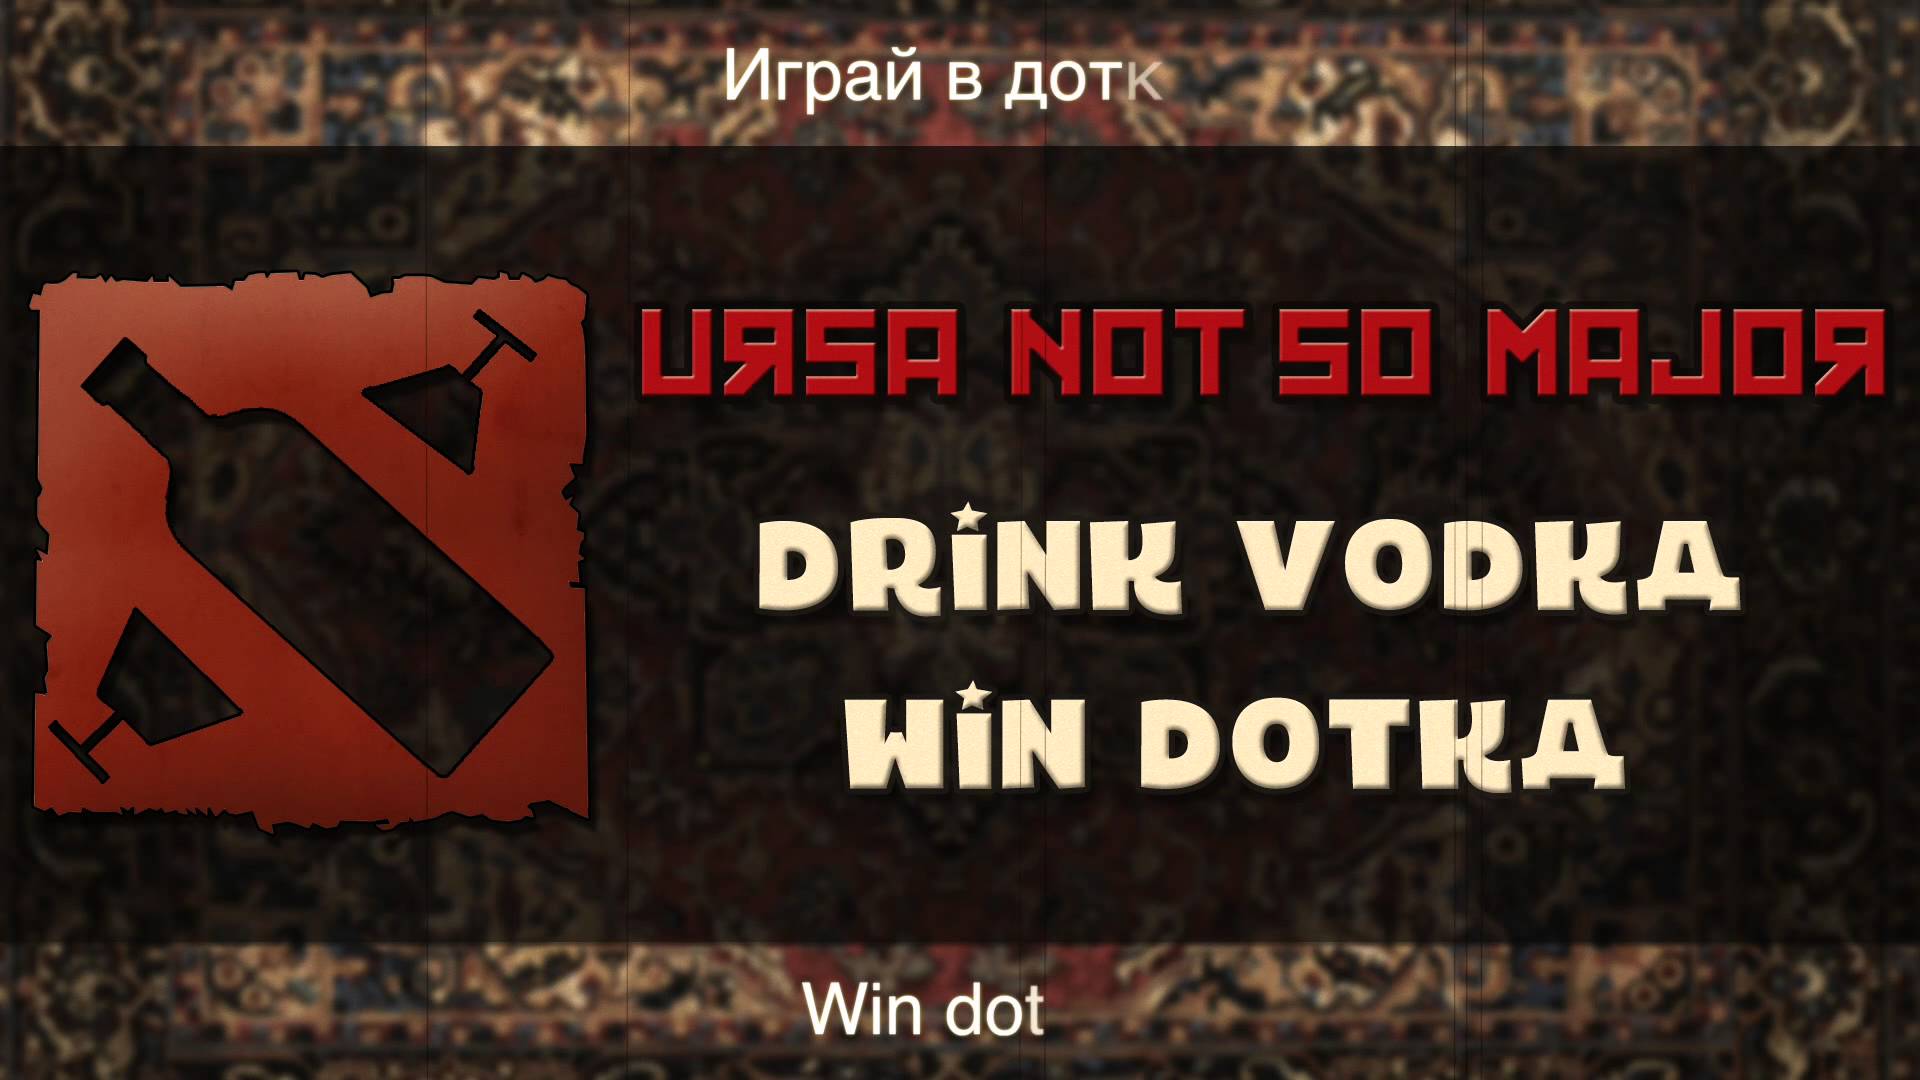 Vodka play dota фото 4